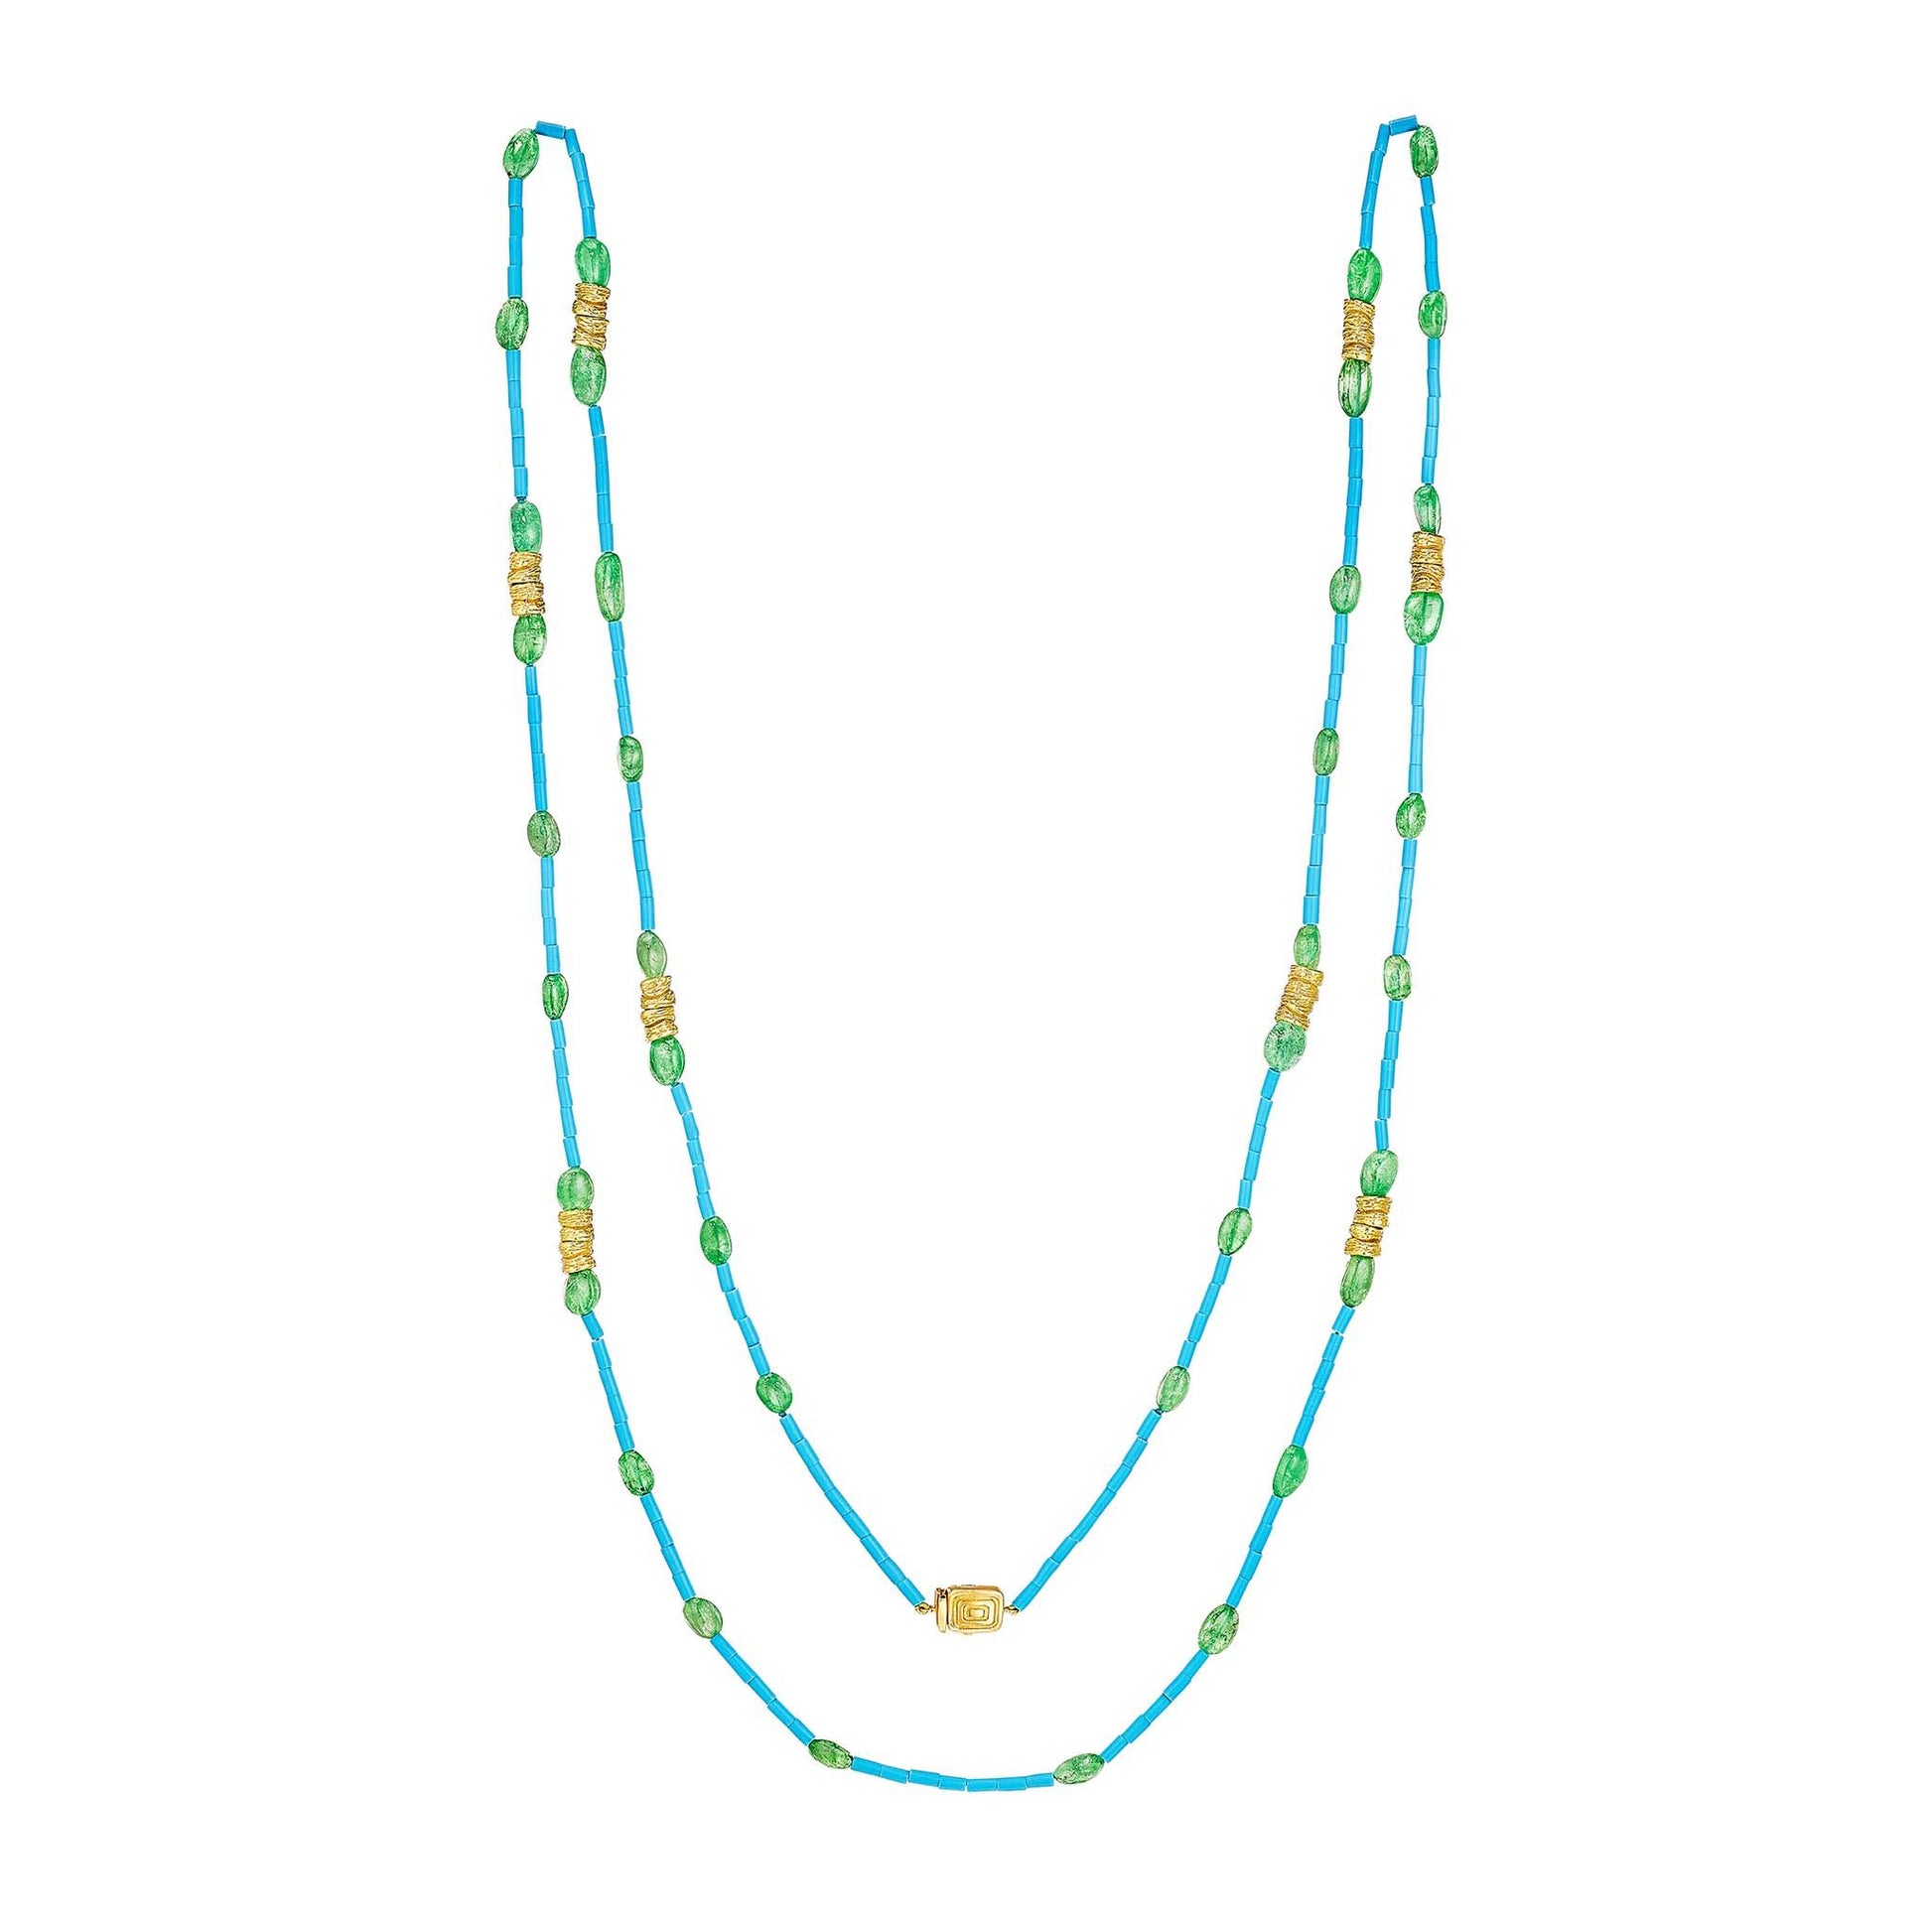 Mimi So Wonderland Turquoise & Tsavorite Bead Necklace